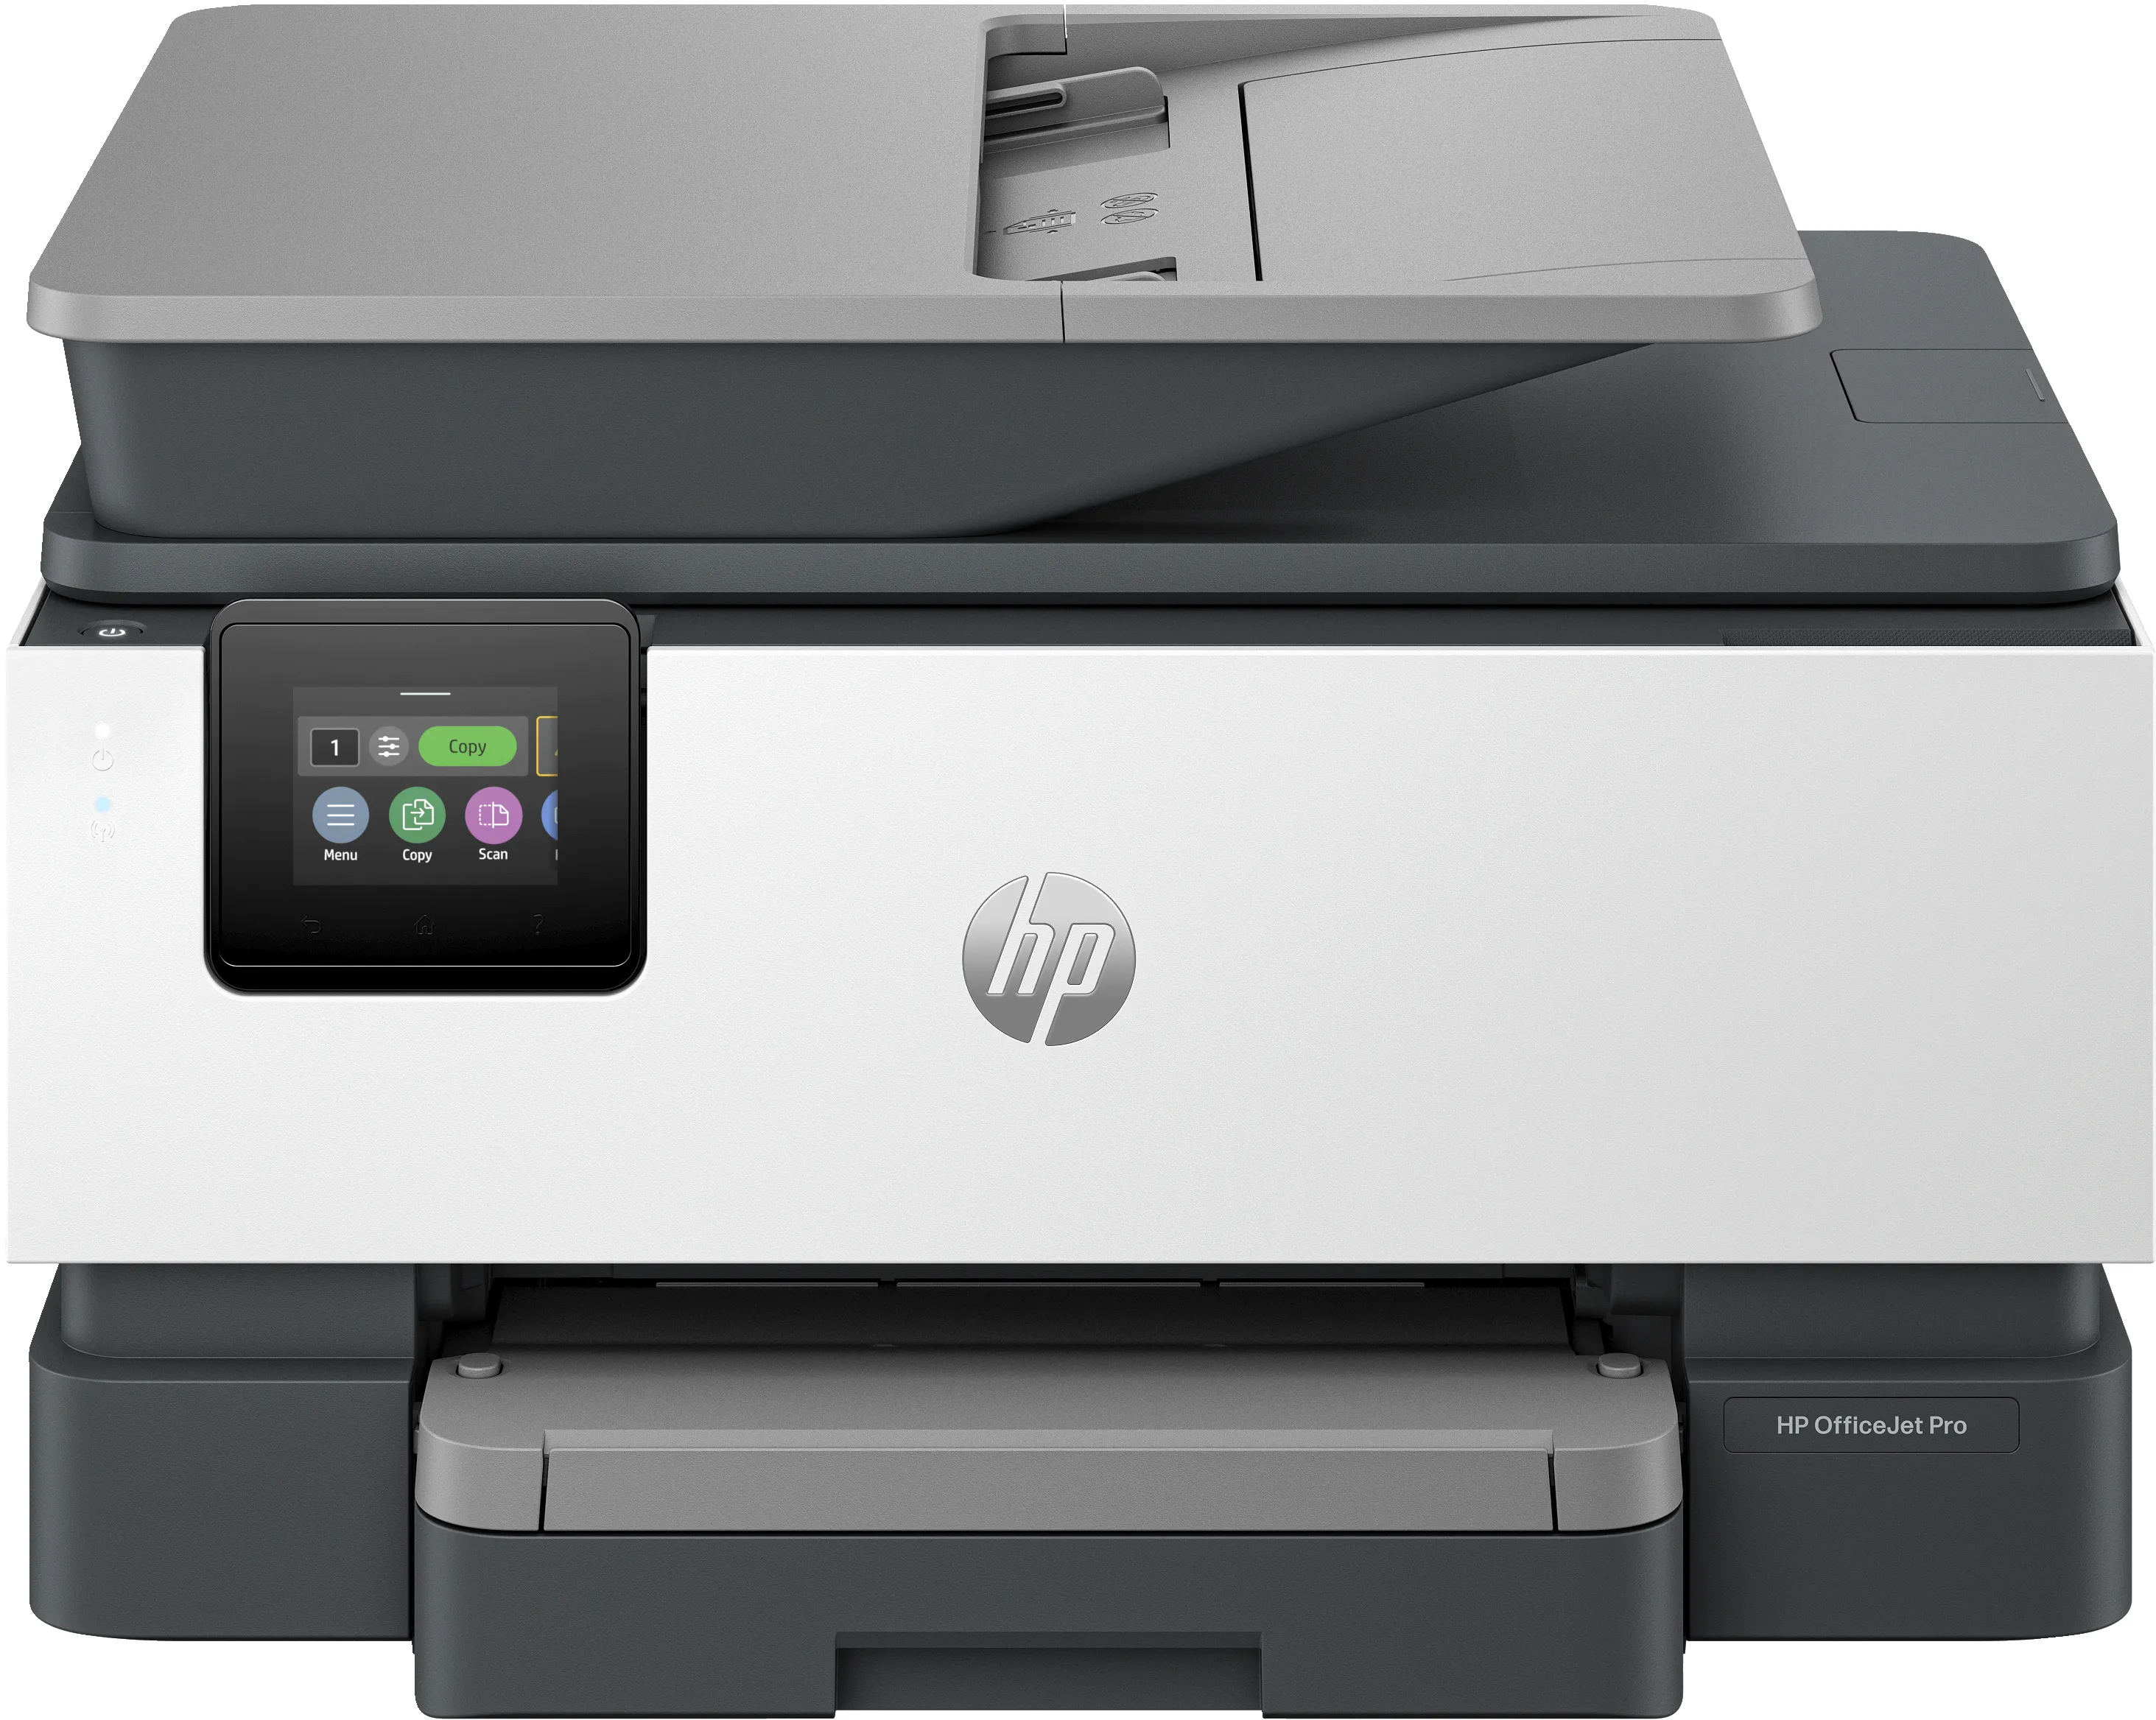 Achat HP OfficeJet Pro 9122e All-in-One 22ppm Printer au meilleur prix